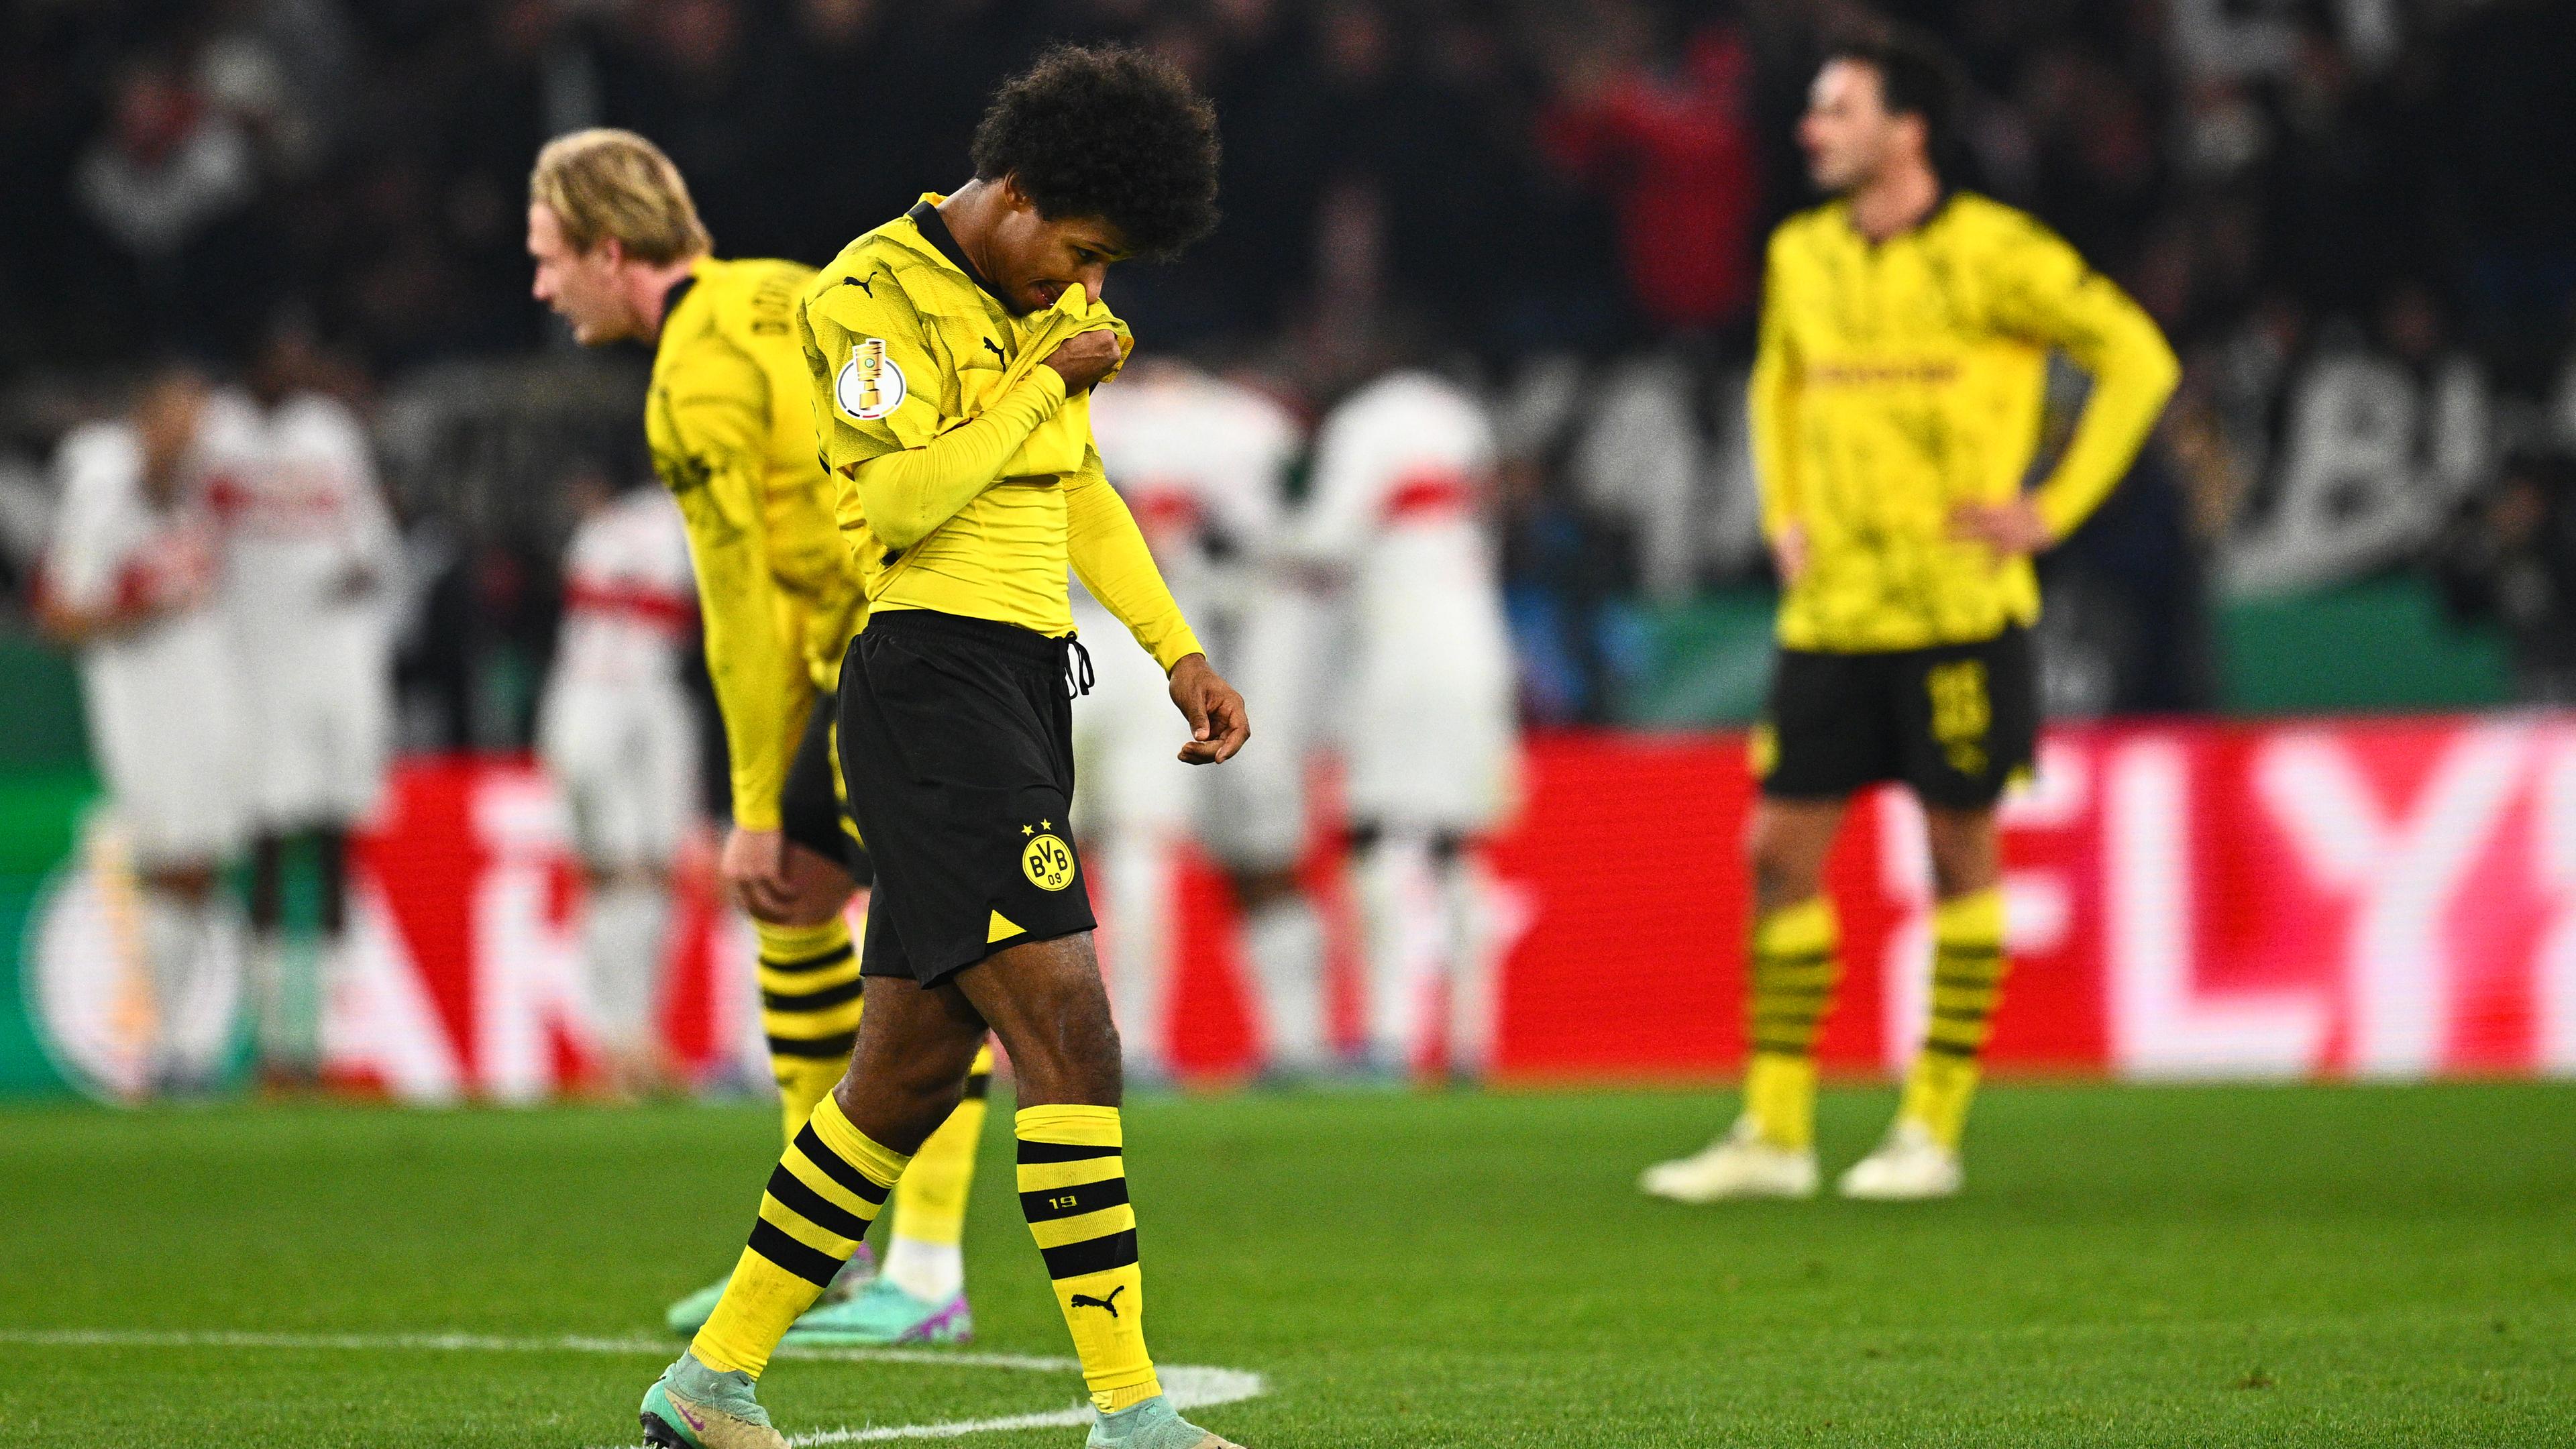 DFB-Pokal, VfB Stuttgart - Borussia Dortmund, Achtelfinale: Dortmunds Karim Adeyemi ist enttäuscht. Im Hintergrund Julian Brandt und Mats Hummels.